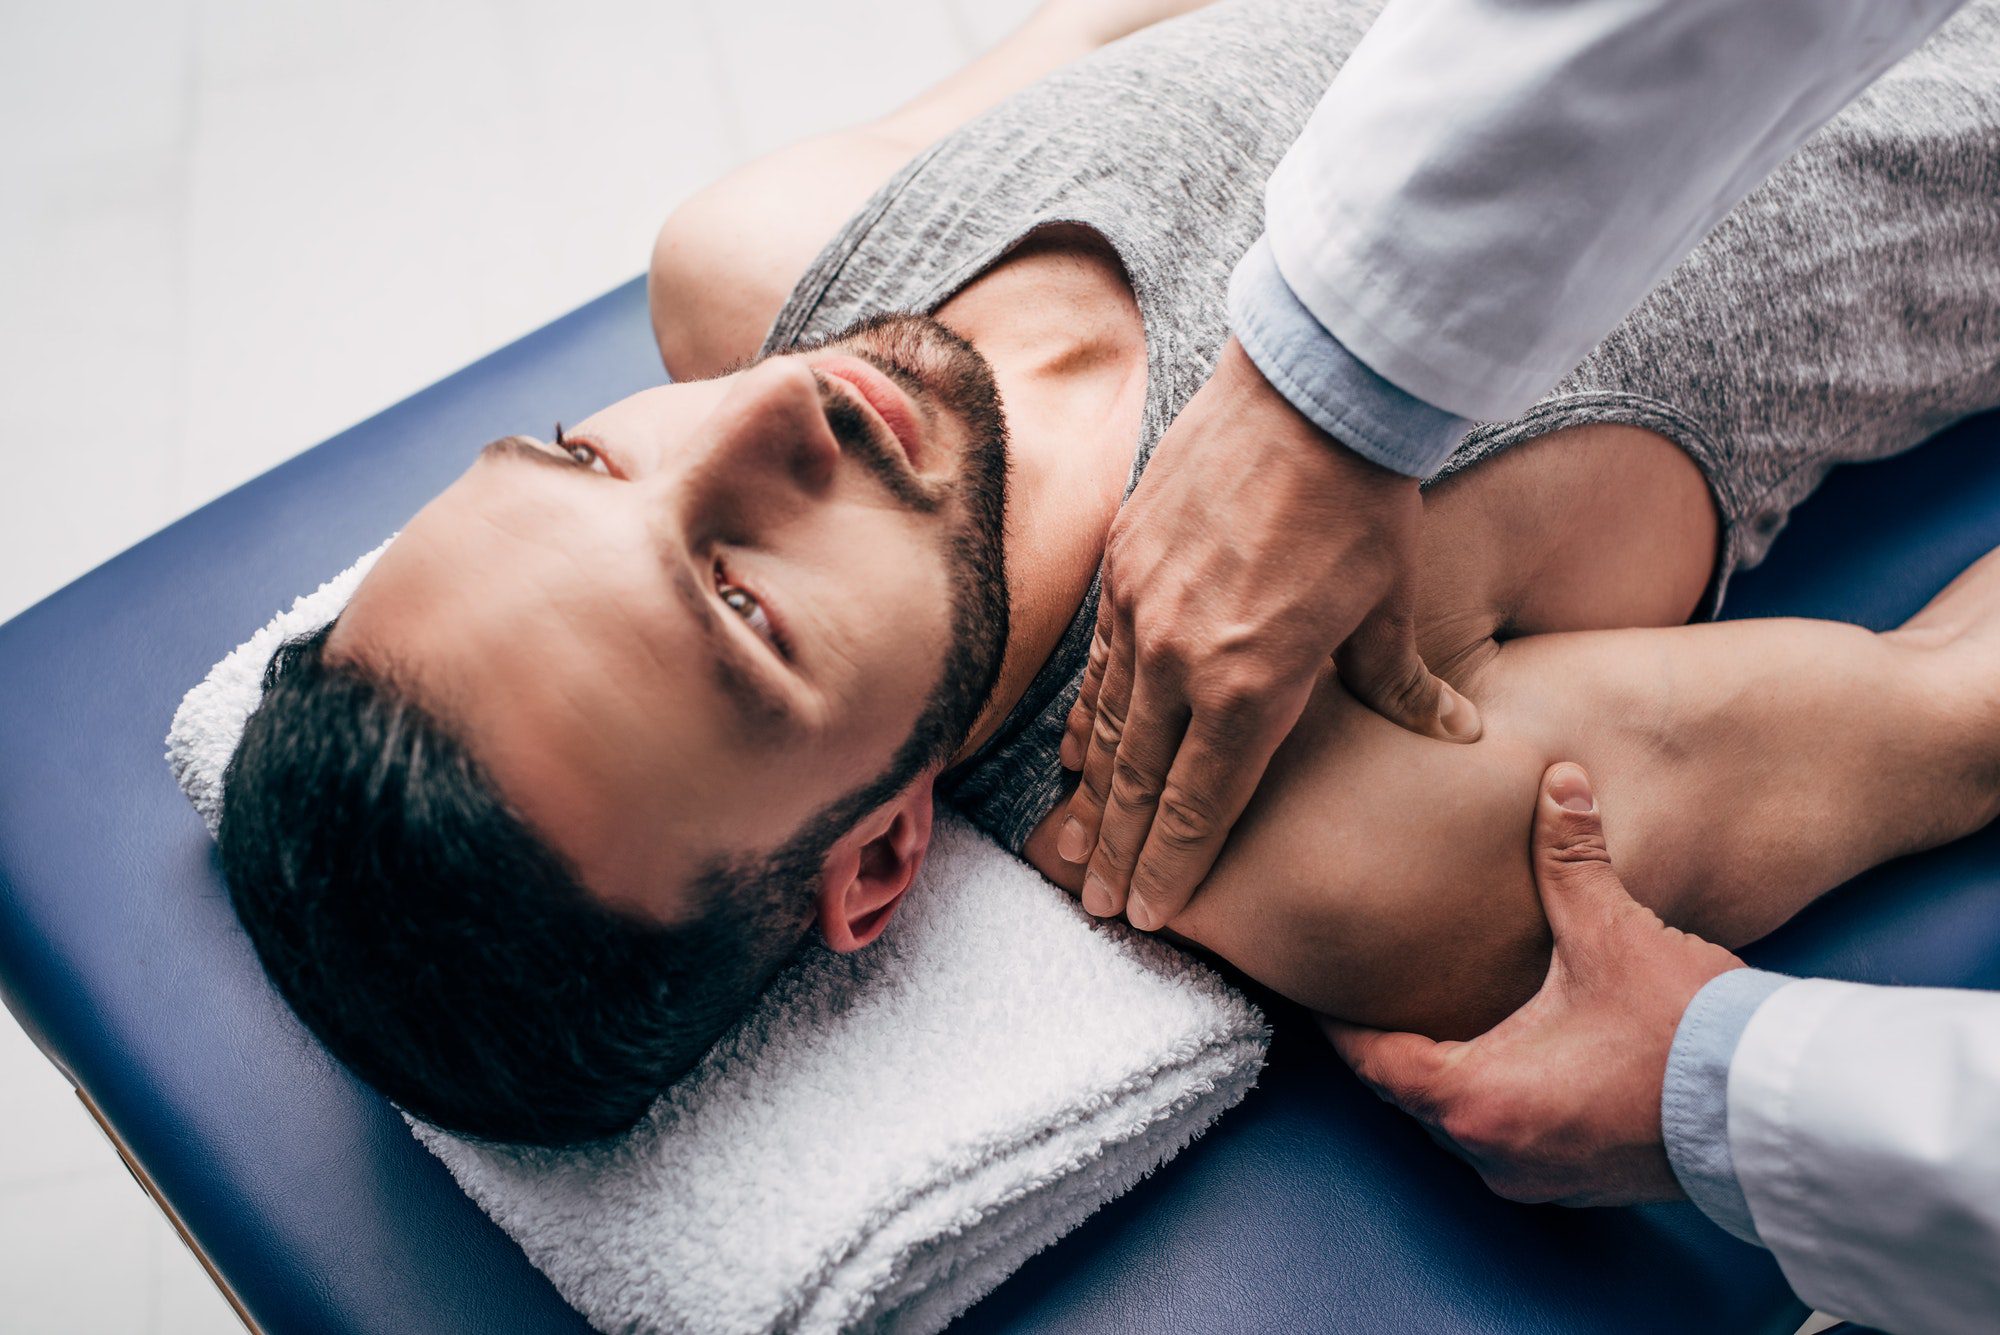 chiropractor massaging shoulder of man on Massage Table in hospital